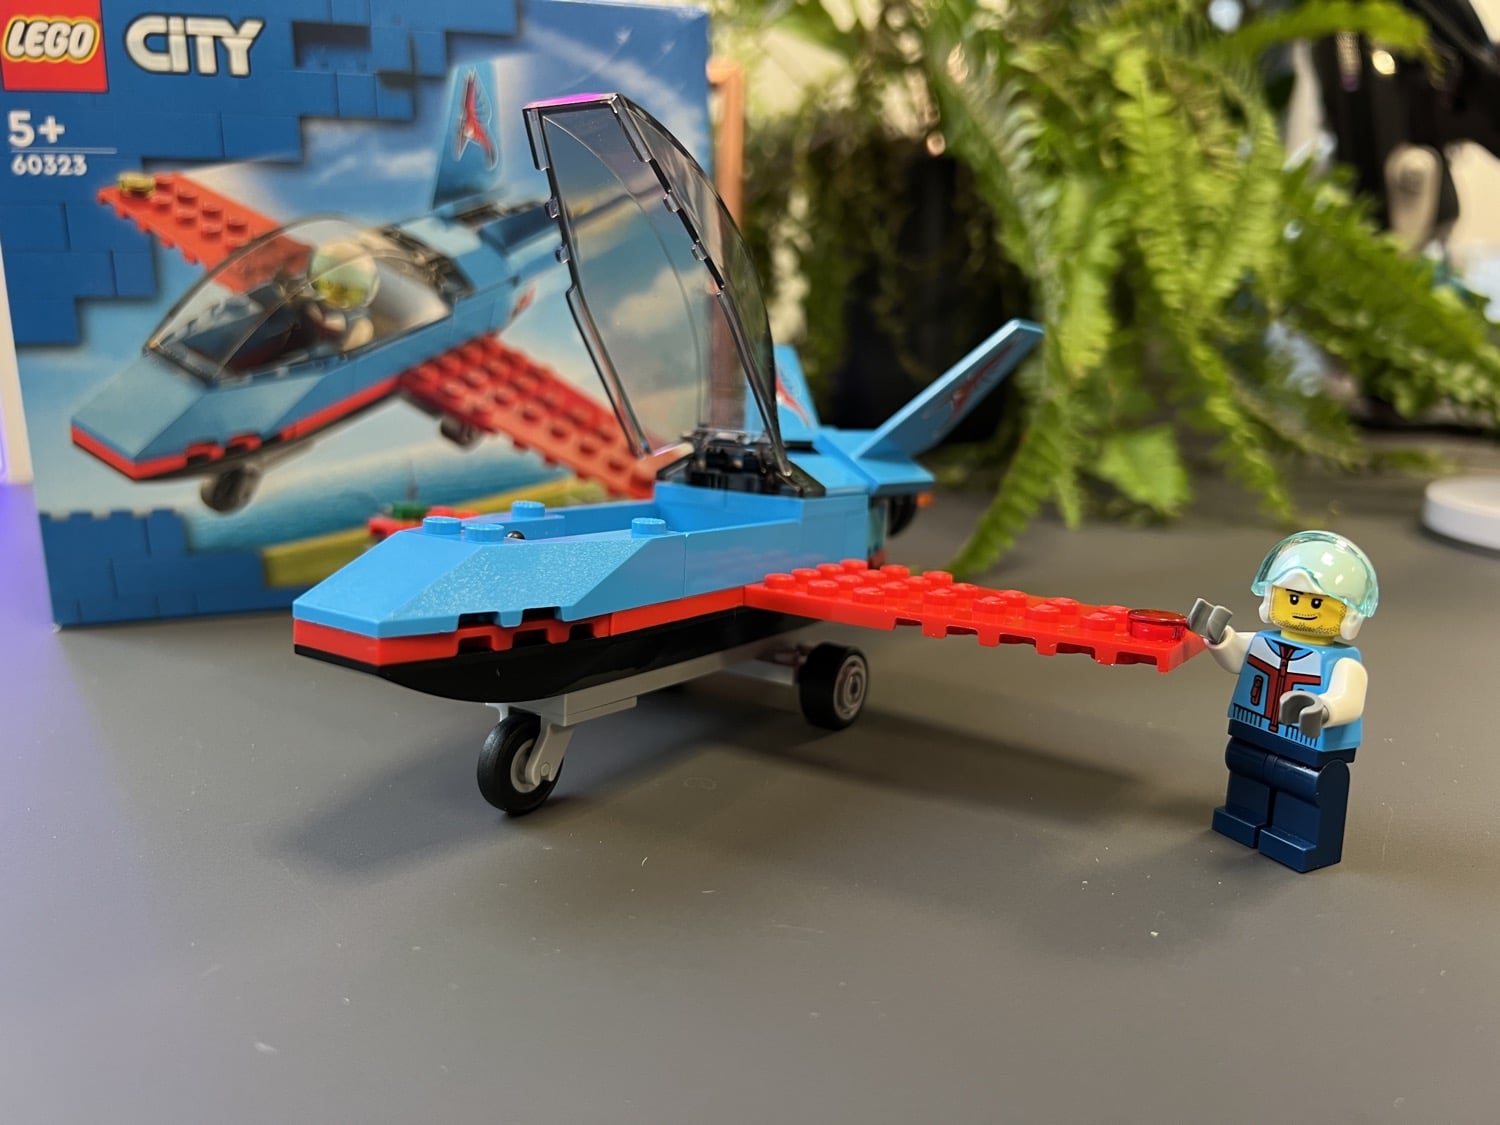 Zwei 9,99 Sets & 41697 LEGO im City Friends 60323 Duell